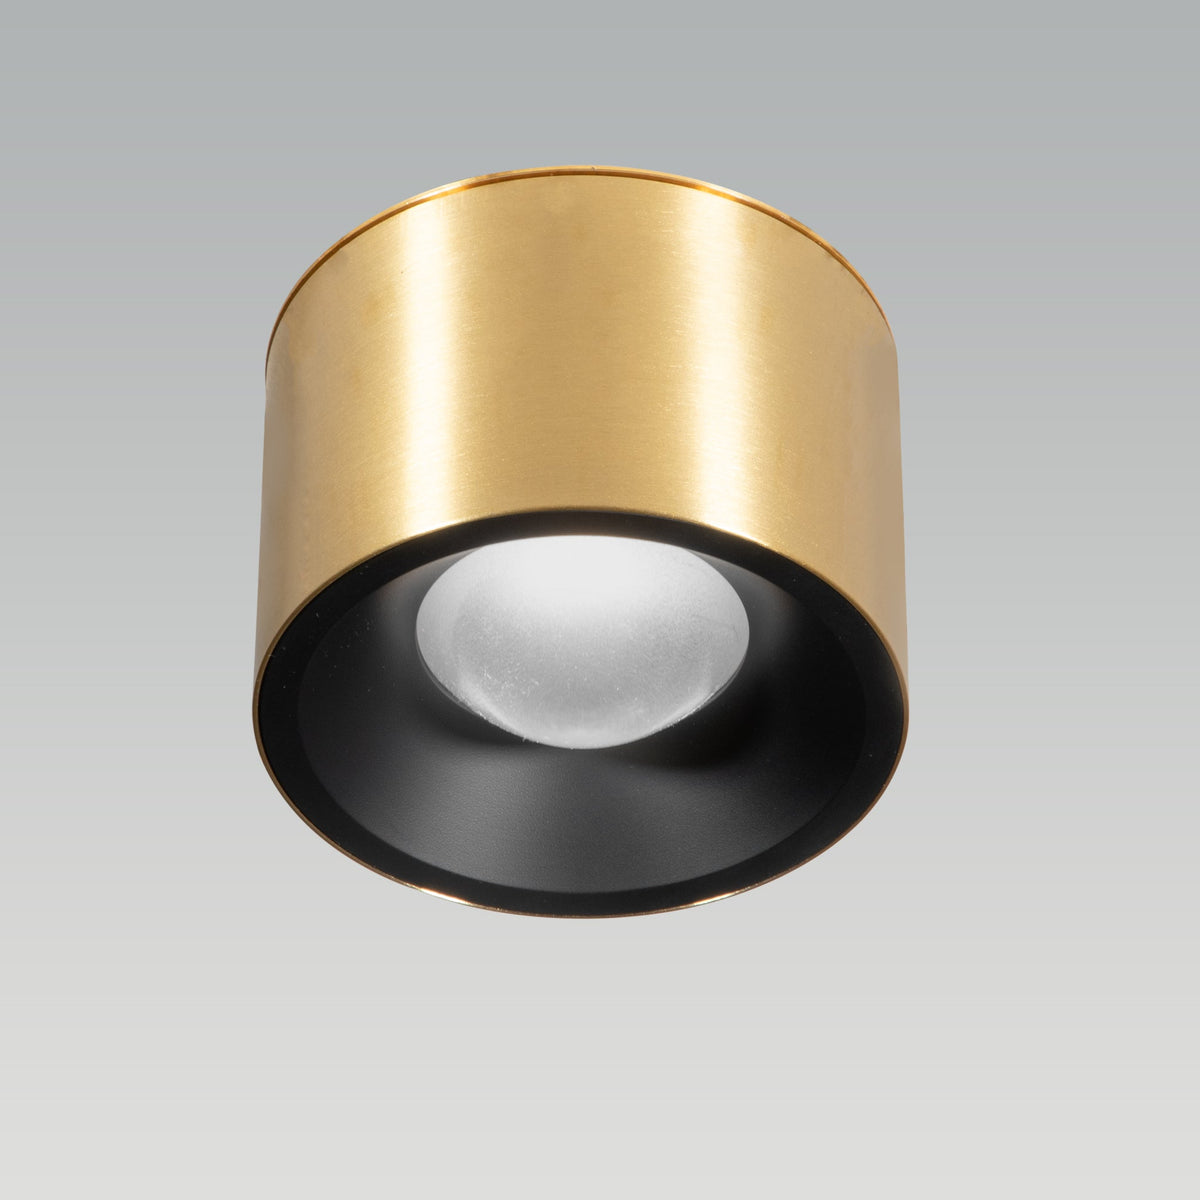 Shop Alpen Brass LED Surface Light online